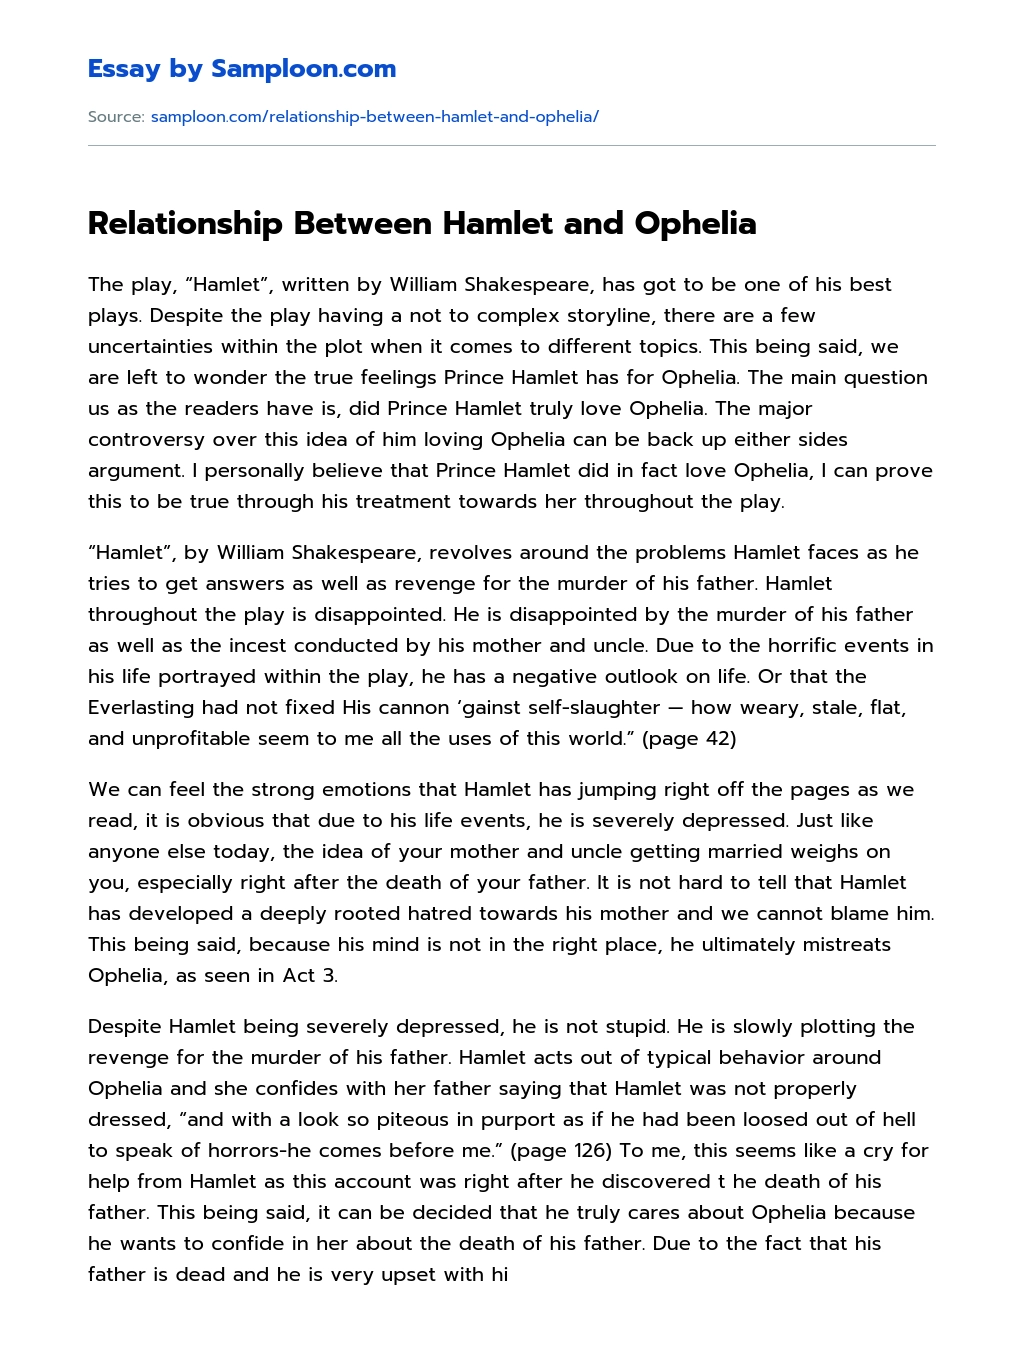 Relationship Between Hamlet and Ophelia essay